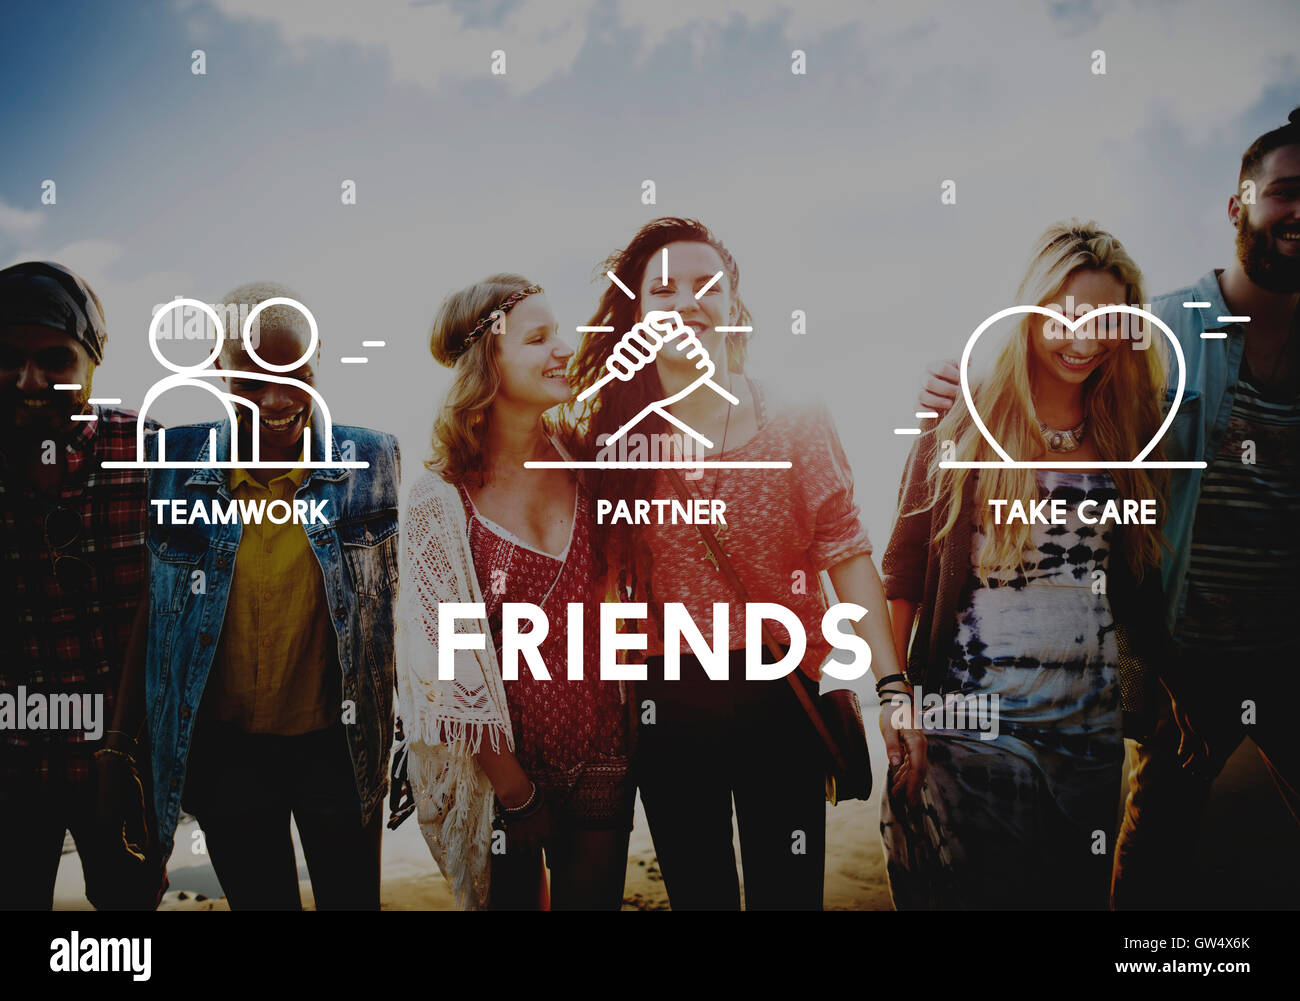 Friends Partner Take Care Teamwork Concept Stock Photo